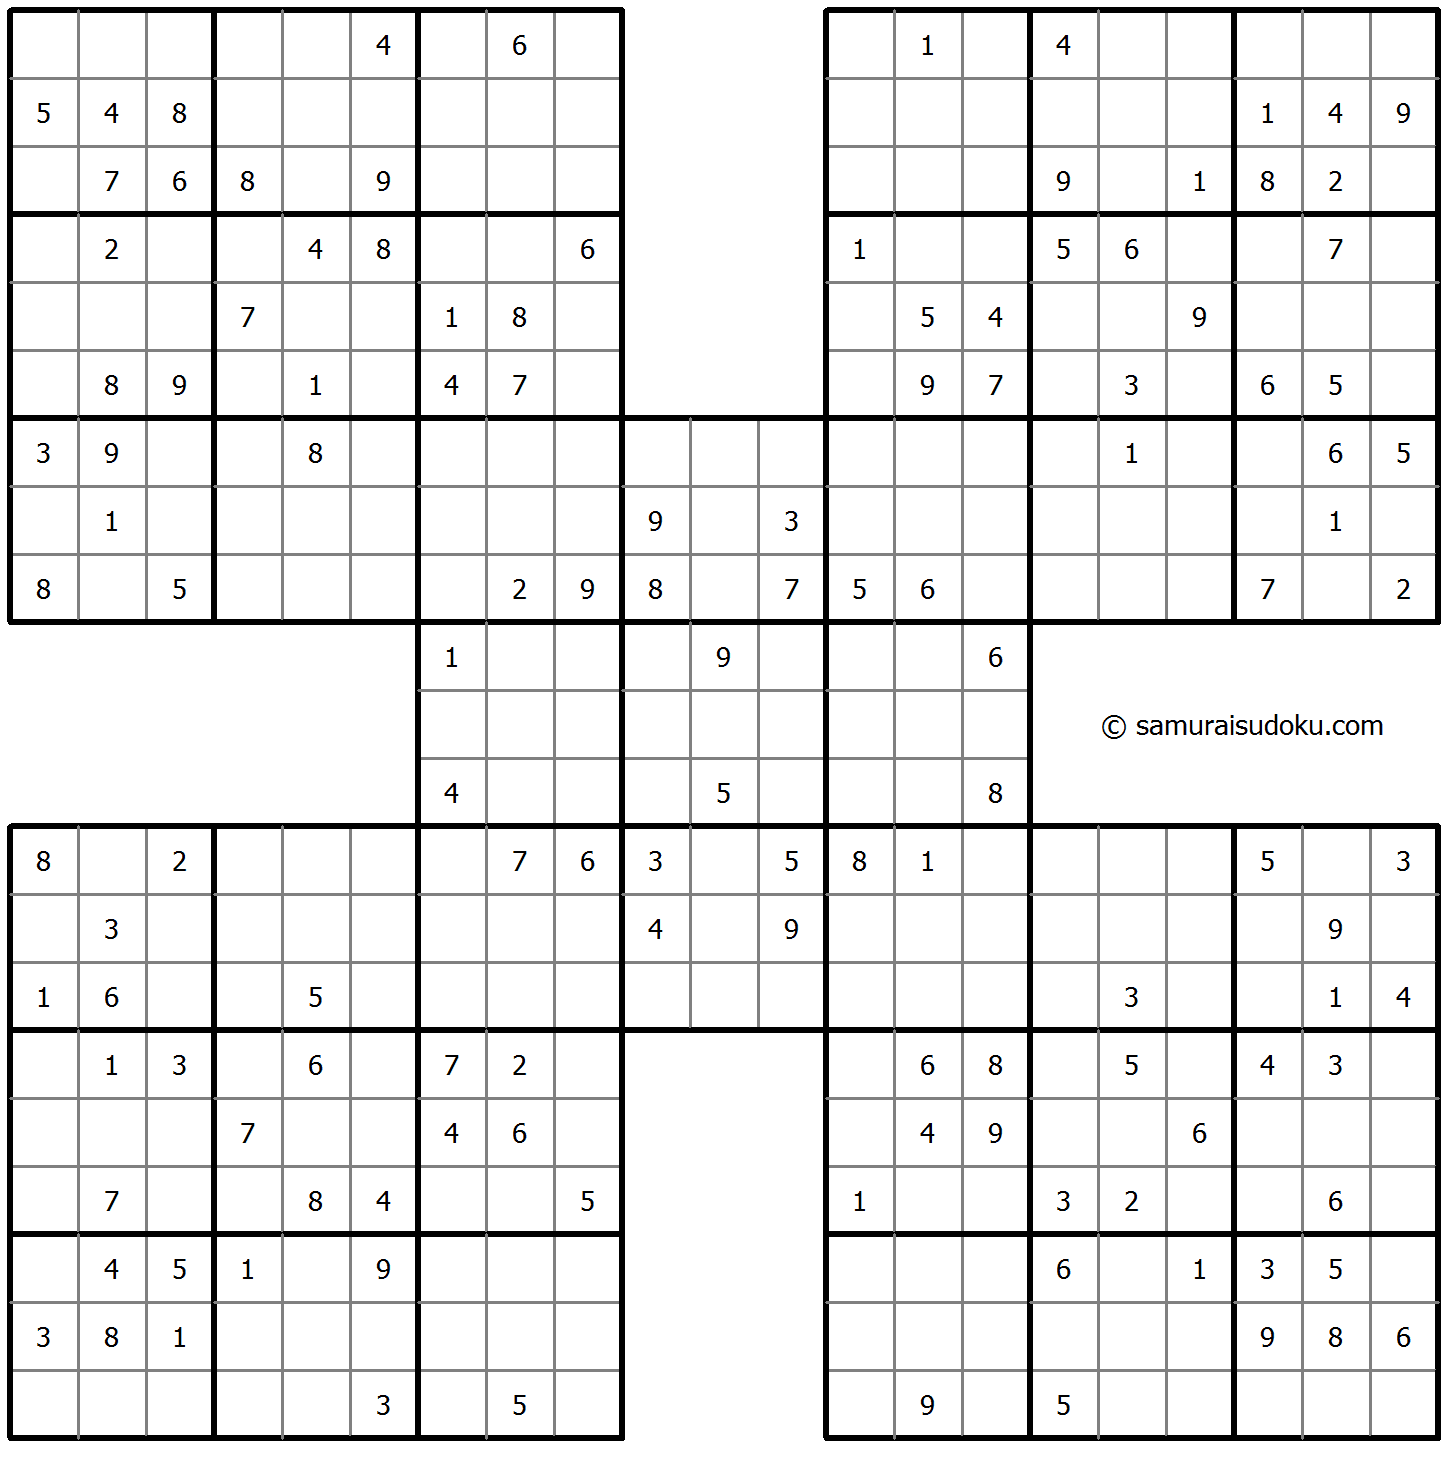 Samurai Sudoku 20-May-2021